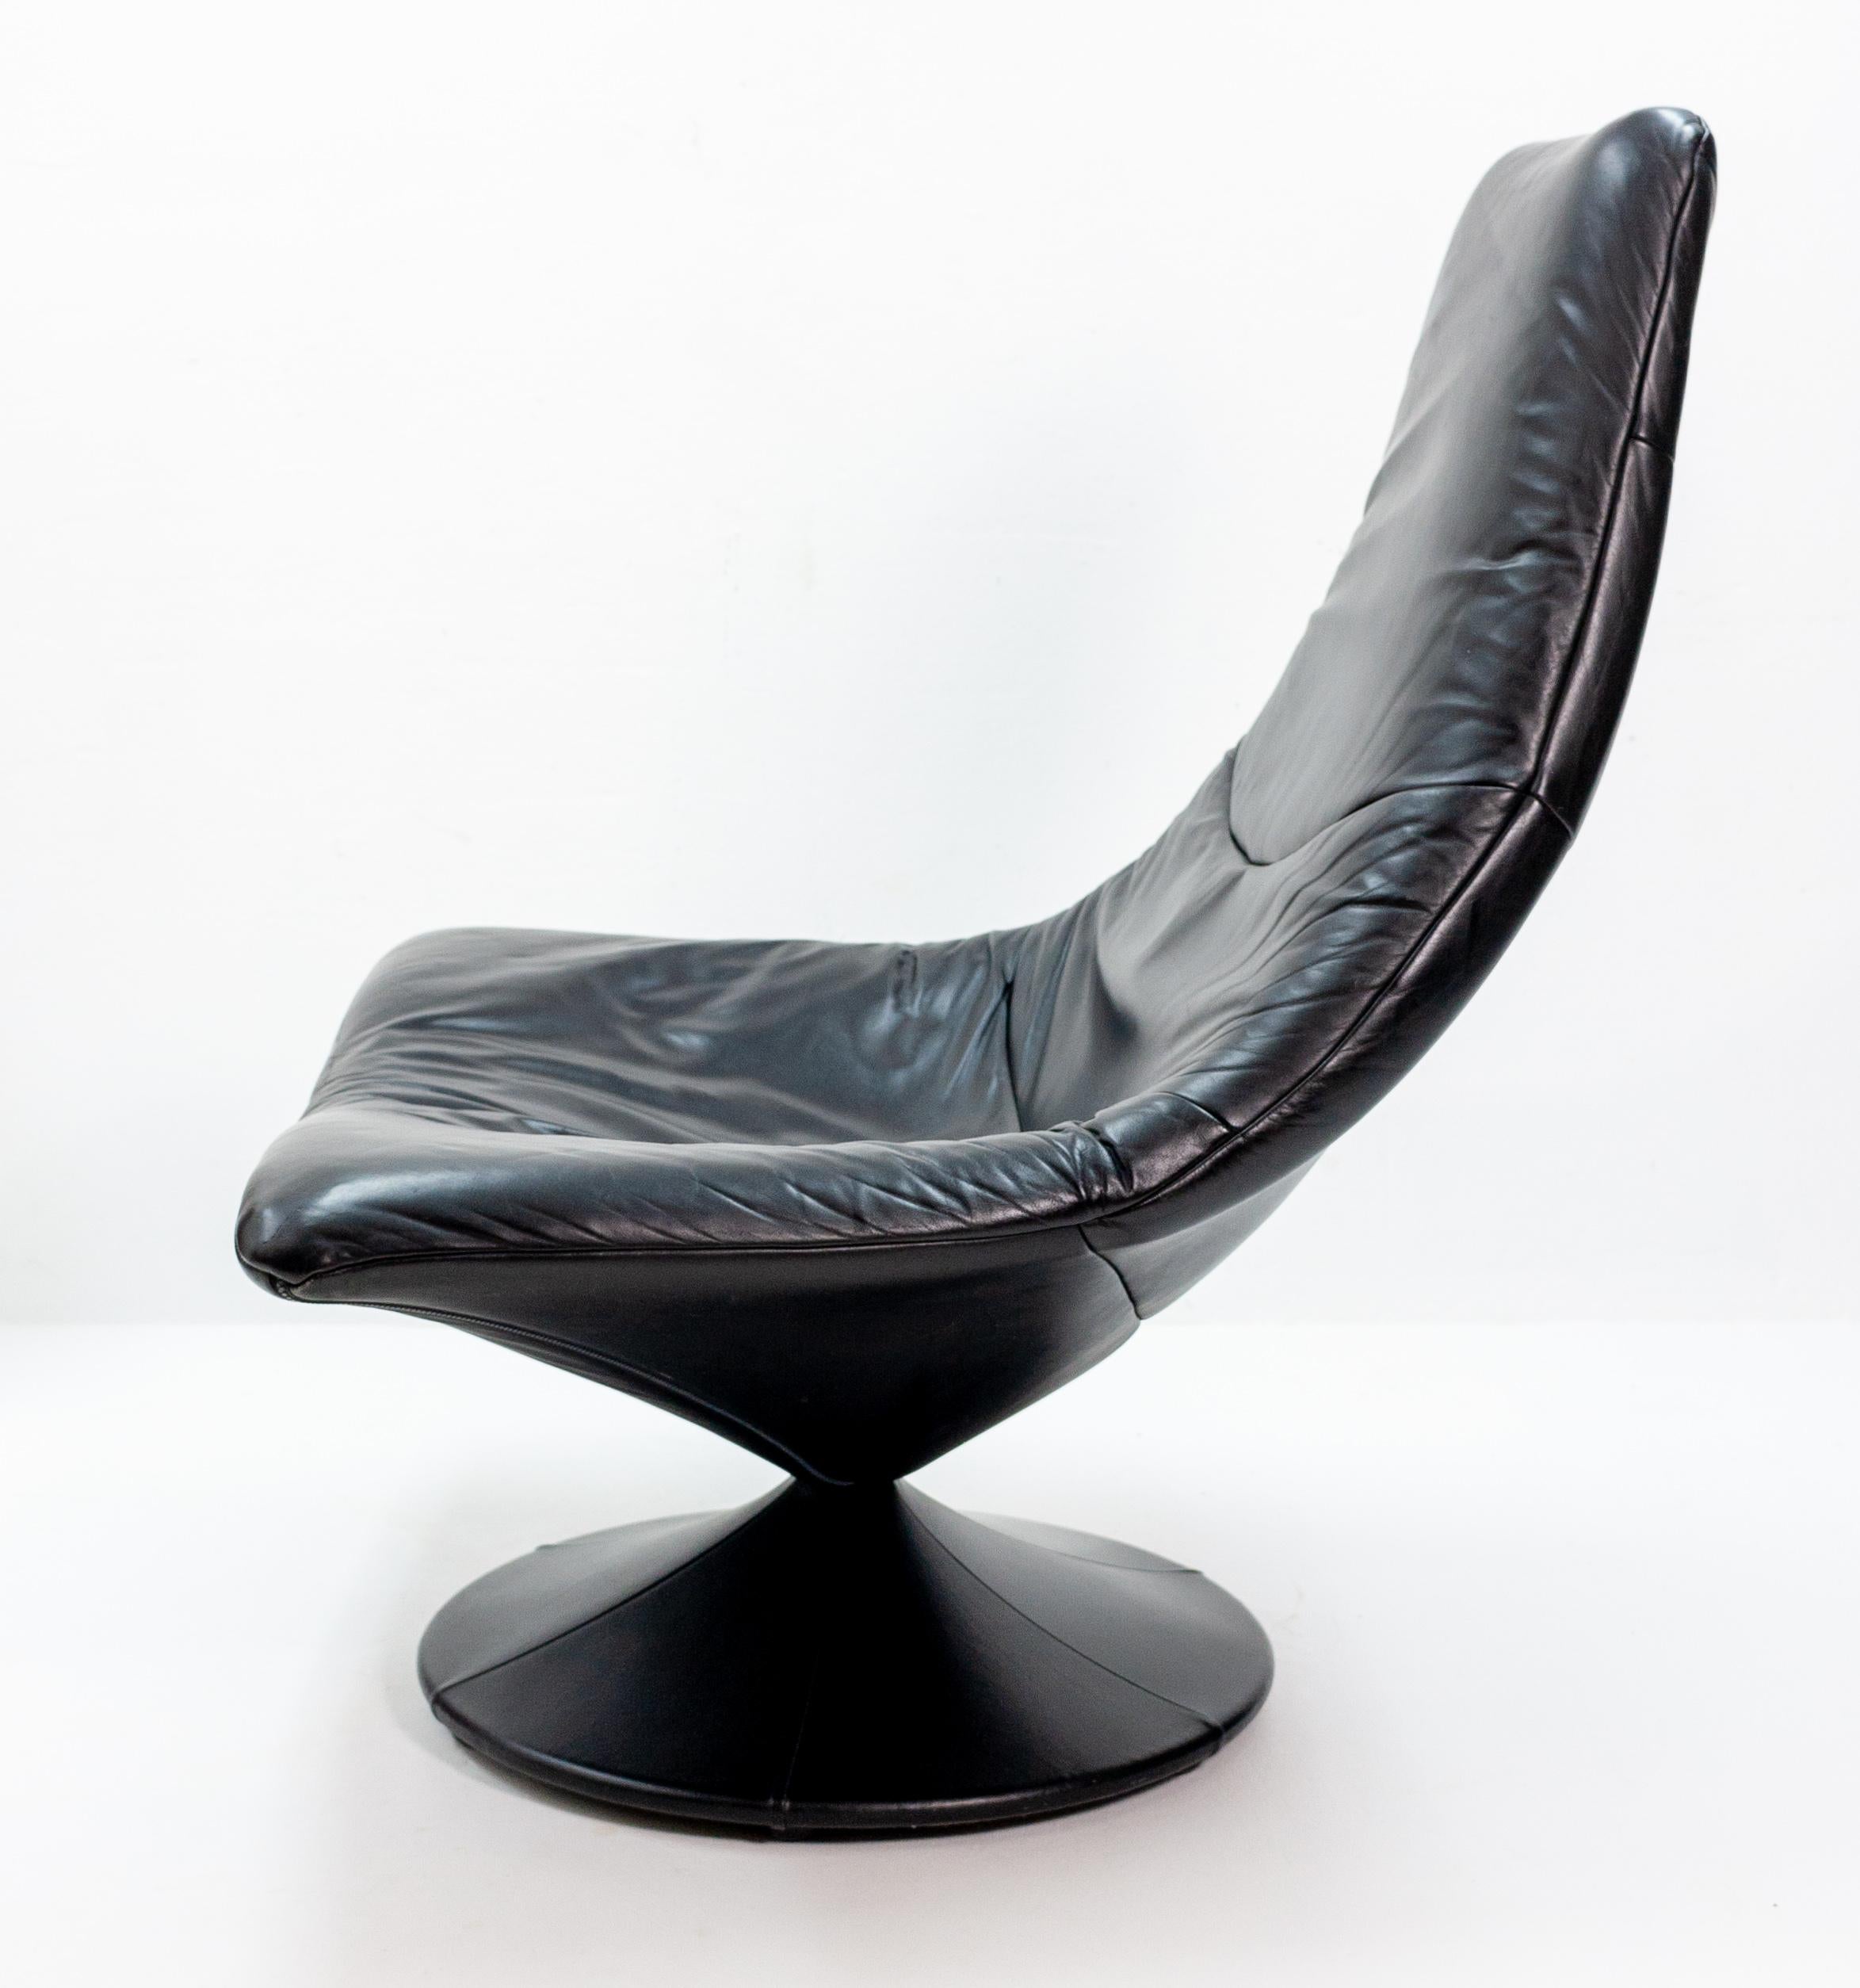 Space Age Black Leather Lounge Chair by Gerard van der Berg, 1970s